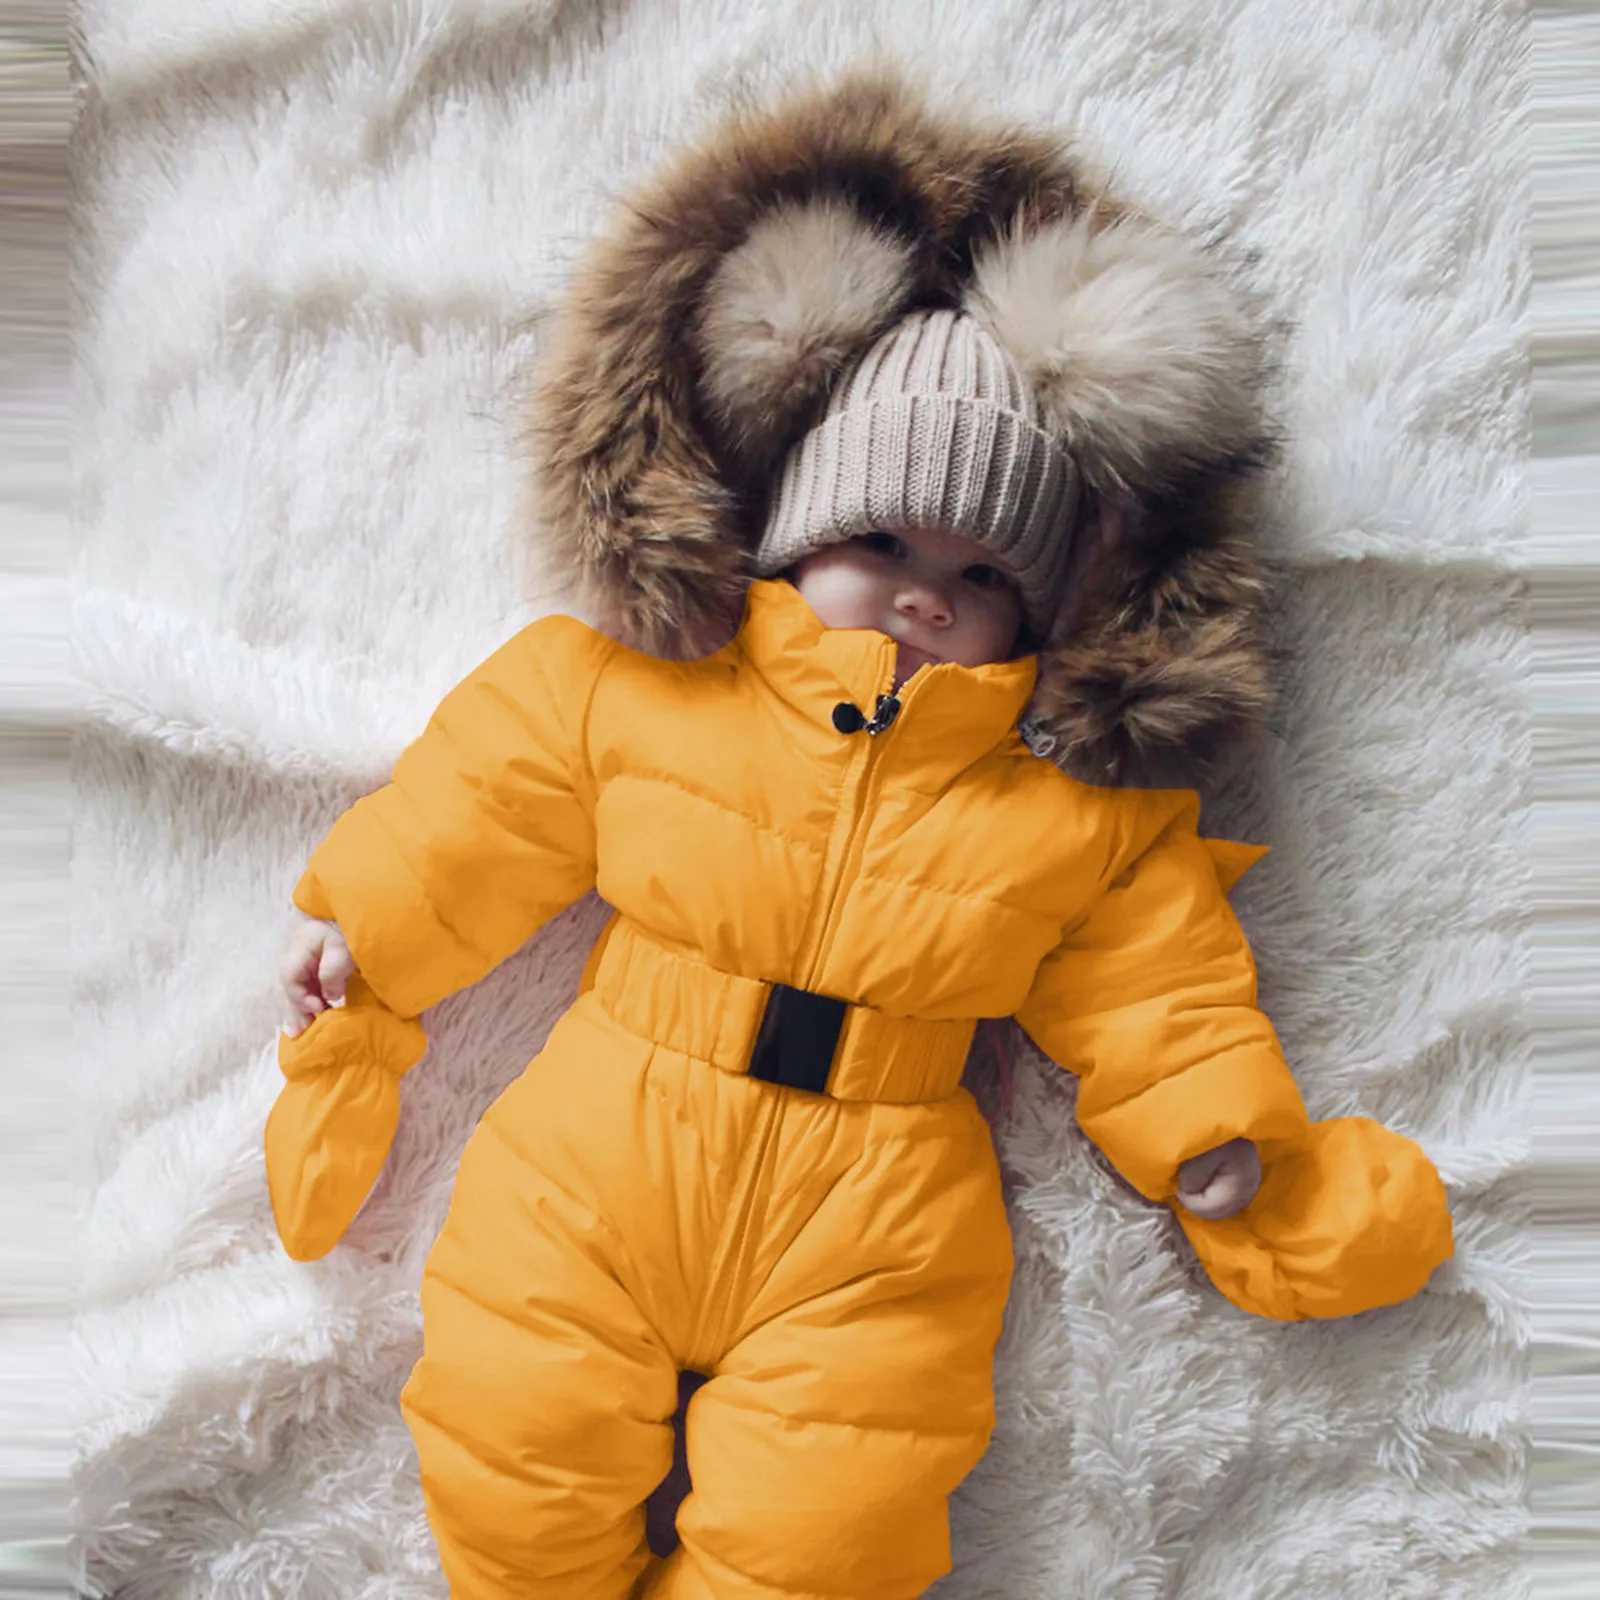 MNLYBABY Unisex Baby Hooded Puffer Jacket Jumpsuit Winter Warm Snowsuit Romper 